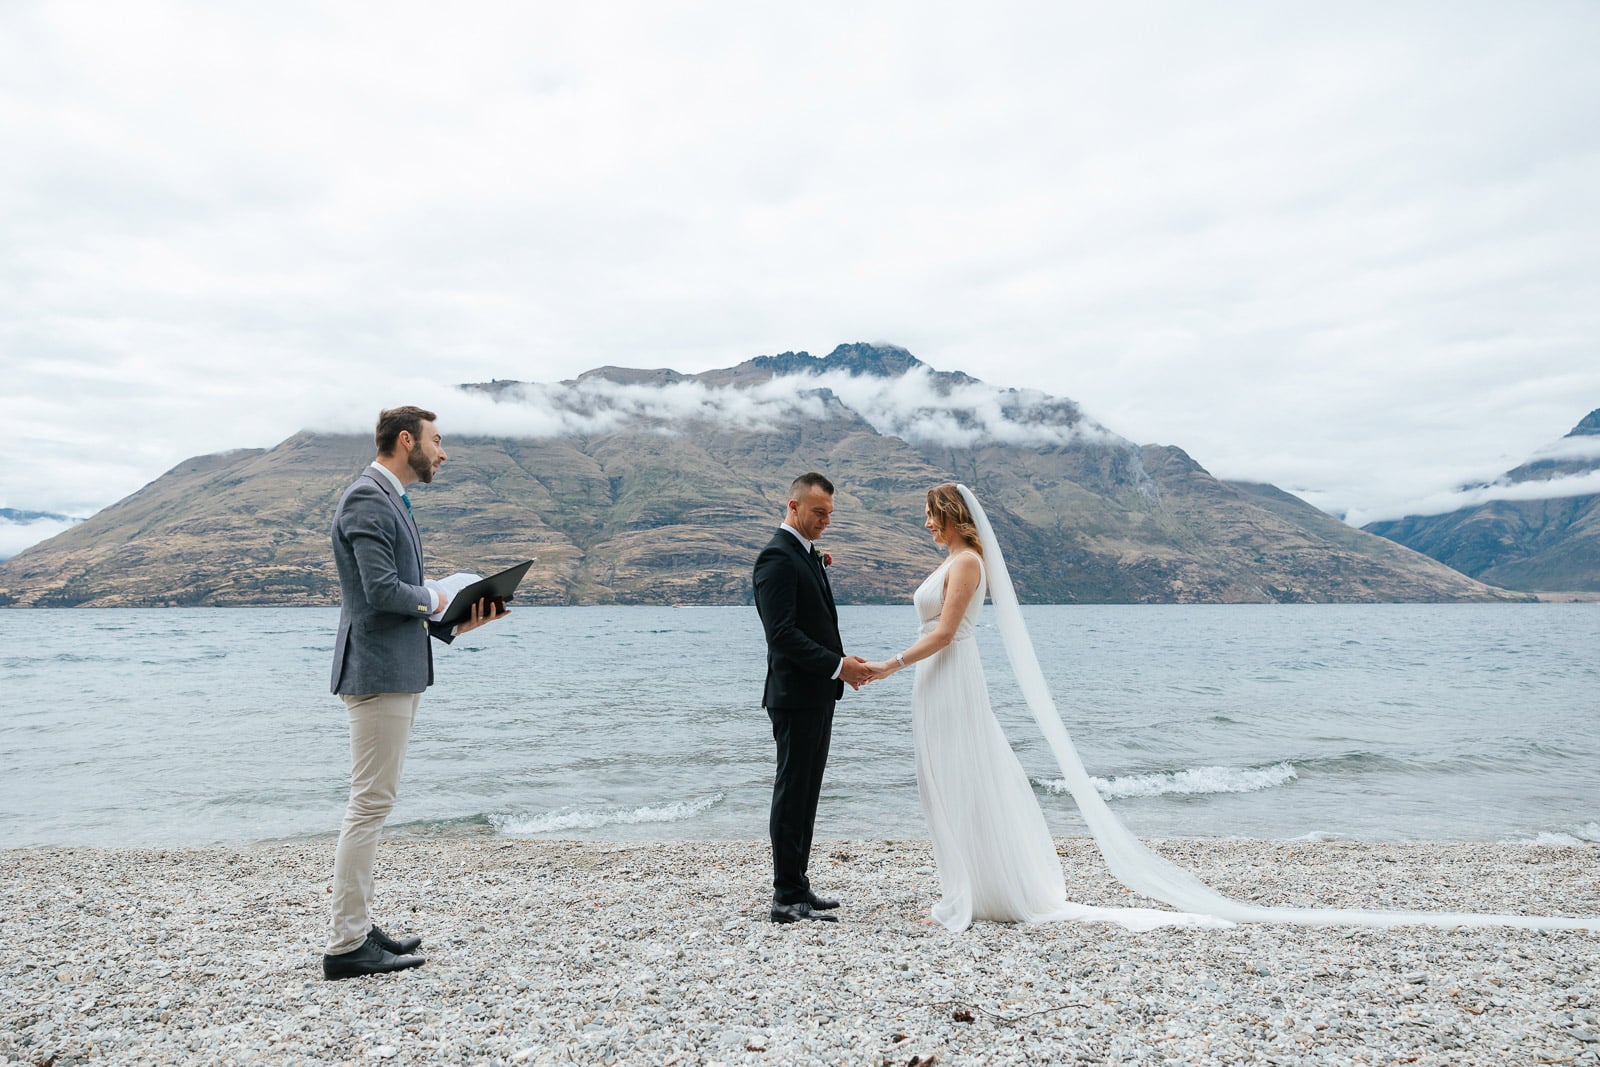 Lake side wedding ceremony in Queenstown , New Zealand